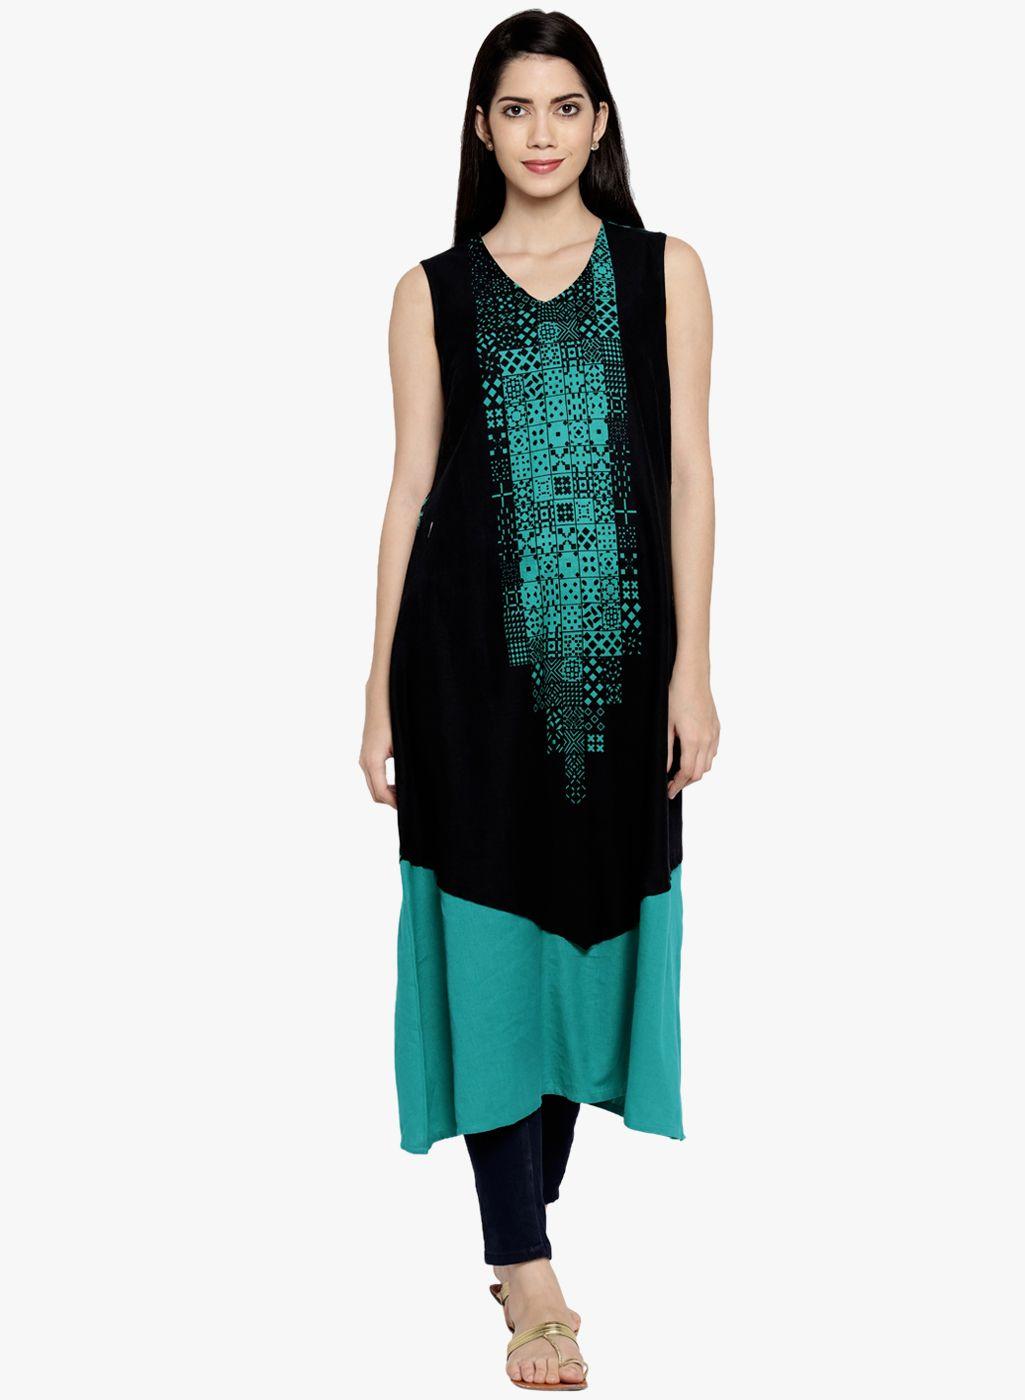 rangmanch by pantaloons women turquoise blue & black printed a-line kurta